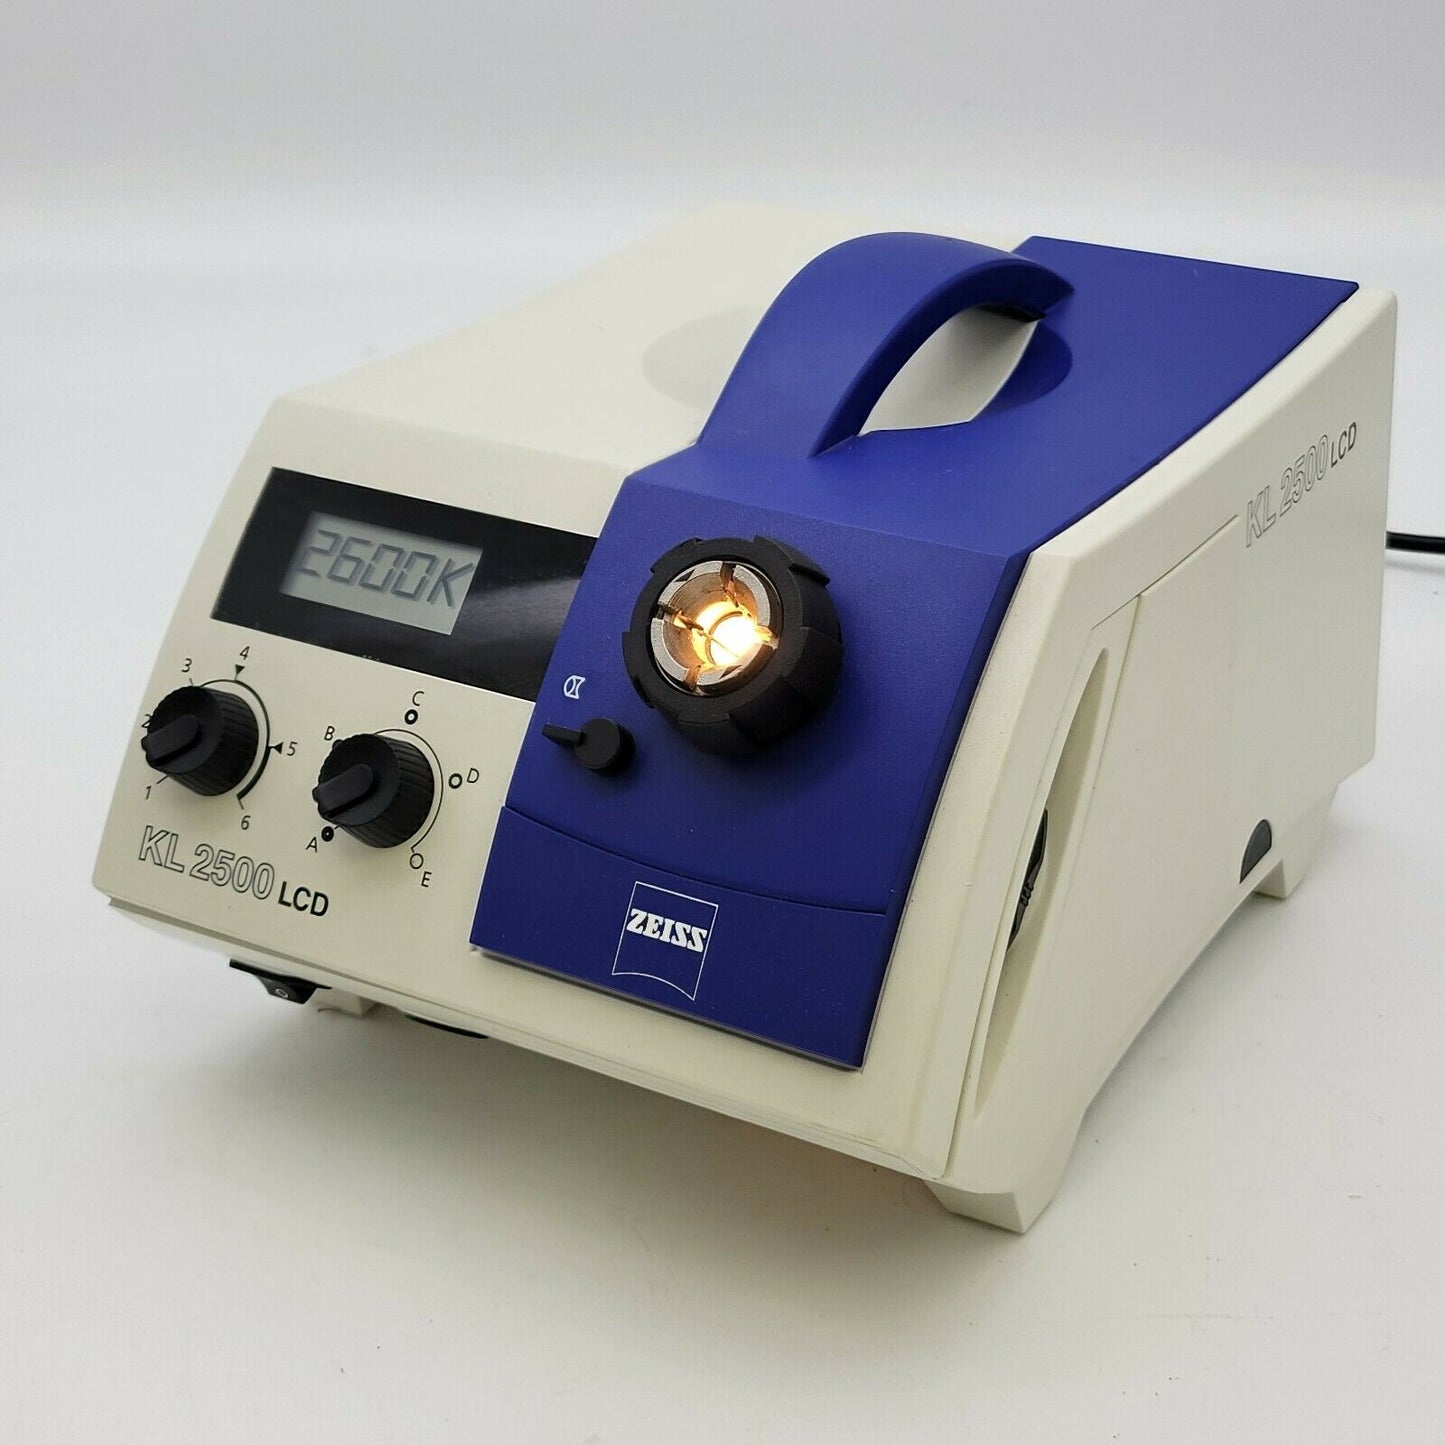 Zeiss Schott KL 2500 LCD Stereo Microscope Halogen Light Source - microscopemarketplace